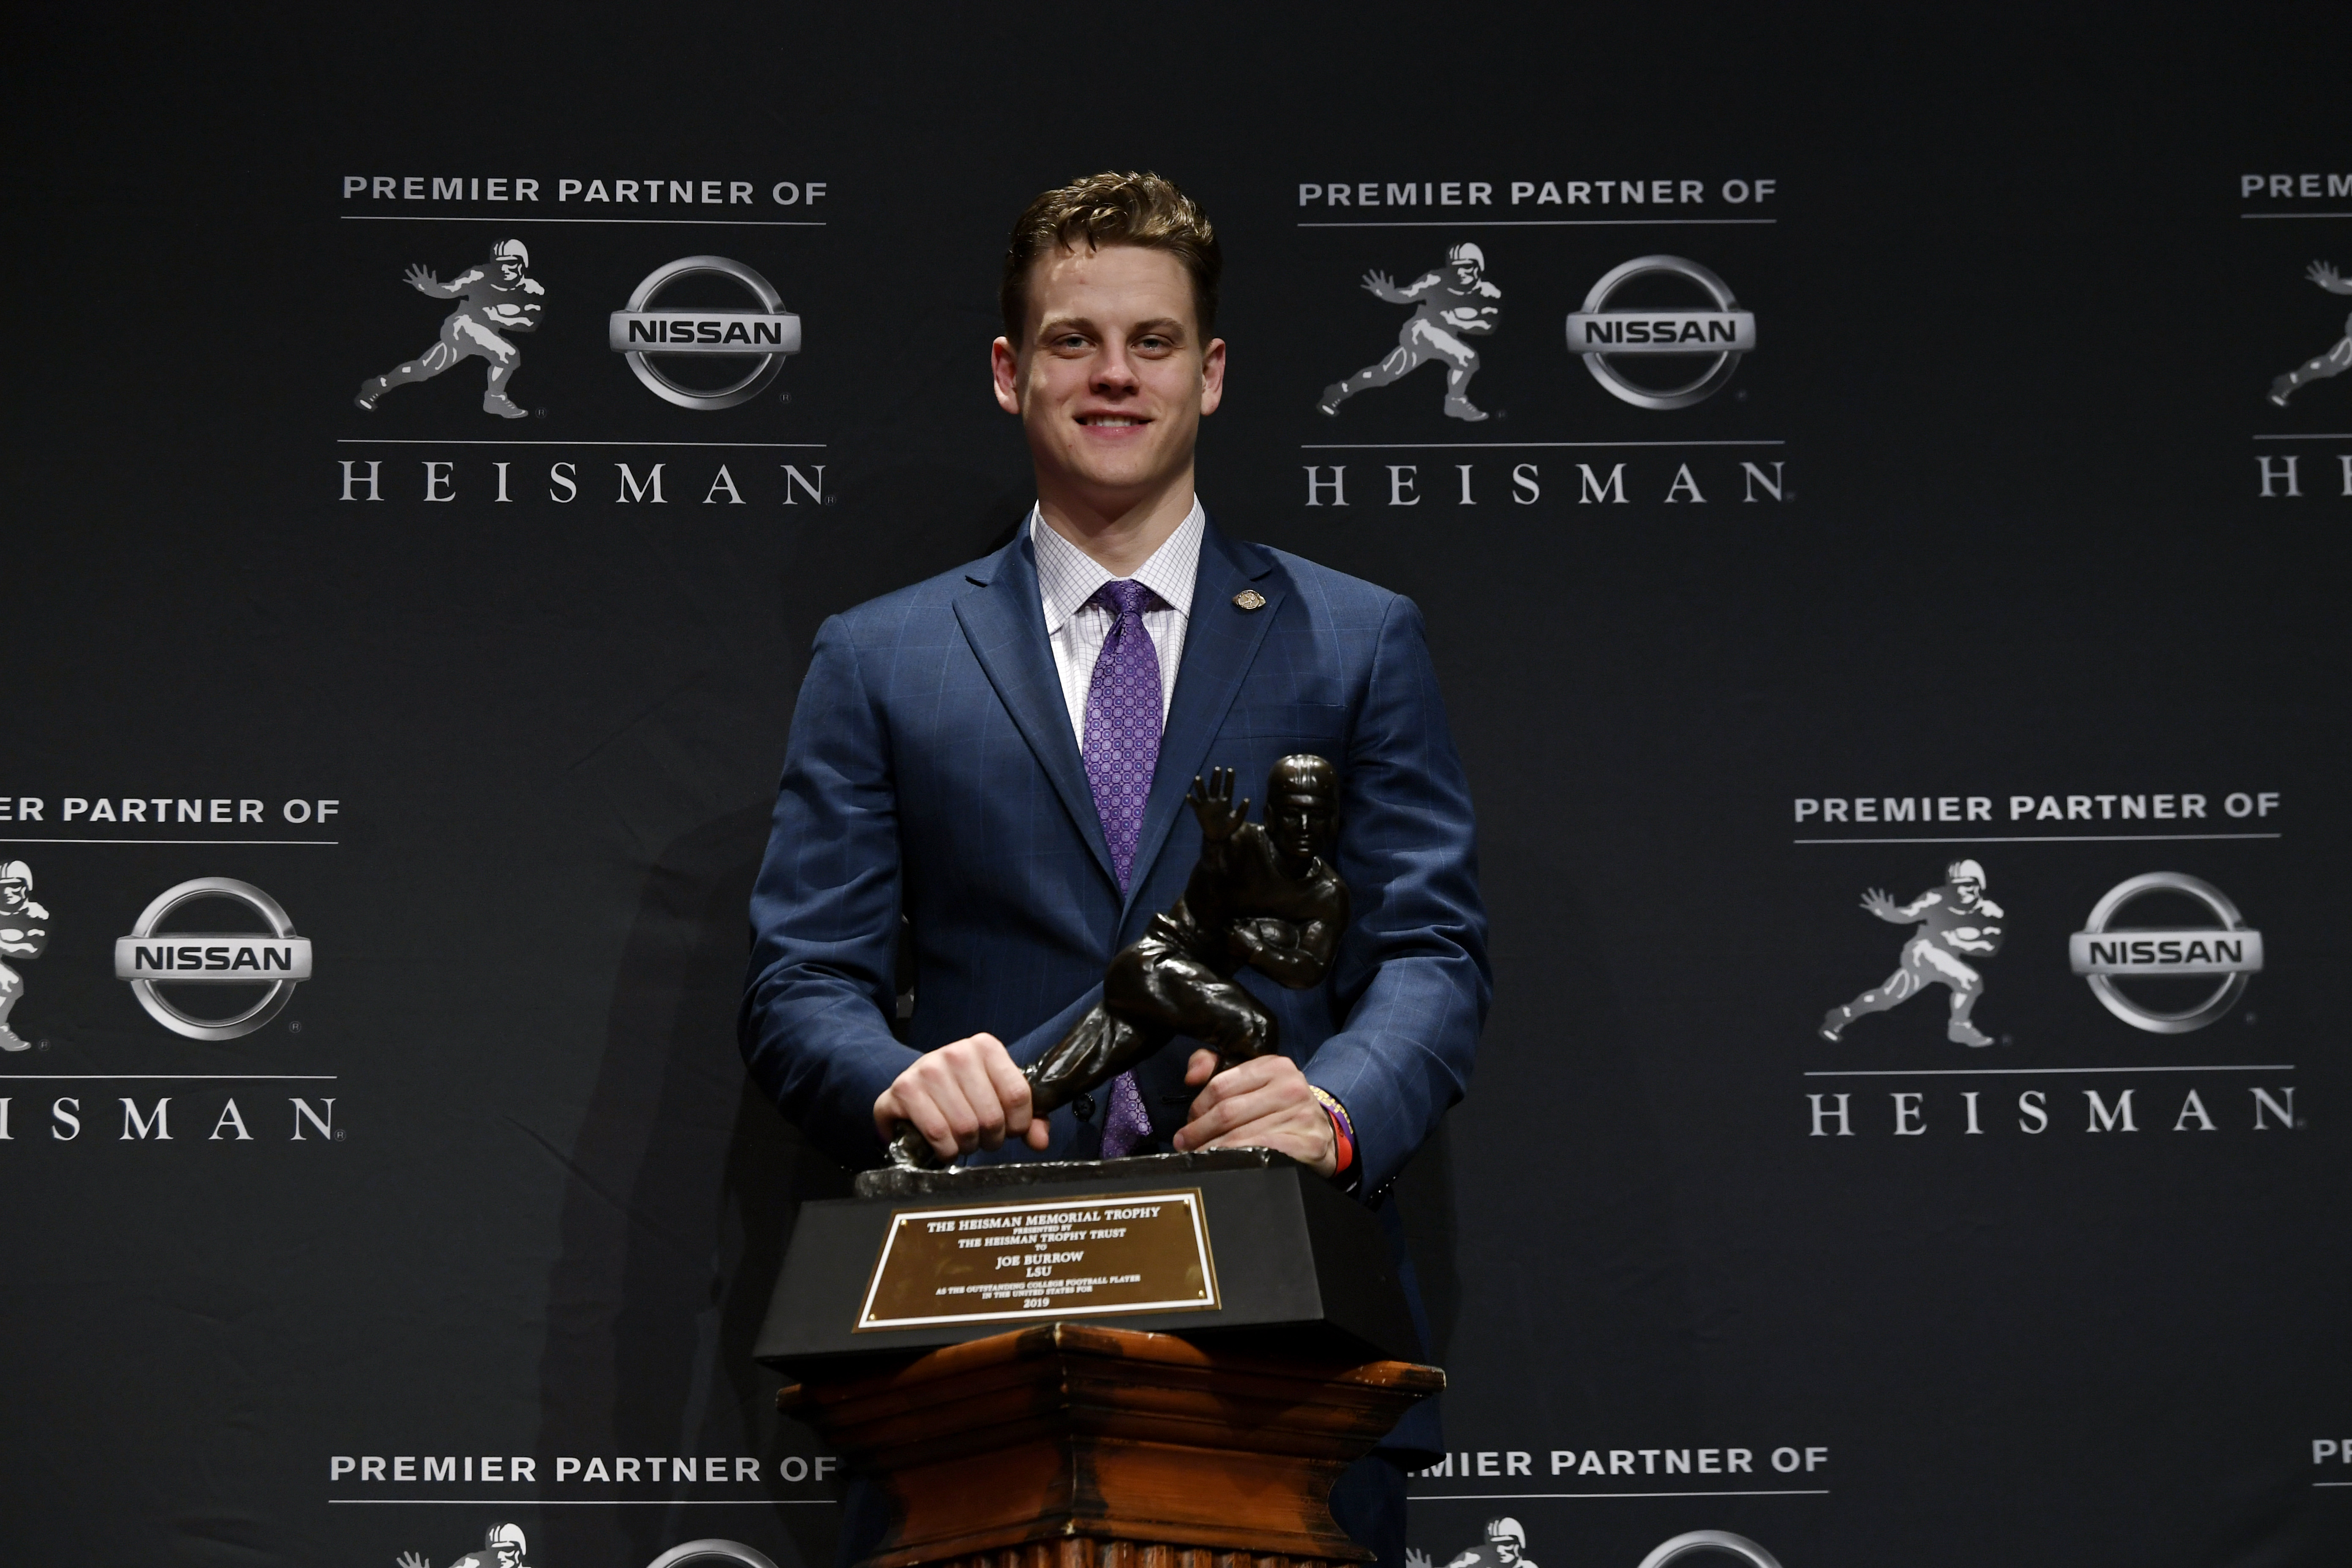 Heisman Trophy Award Show 2019